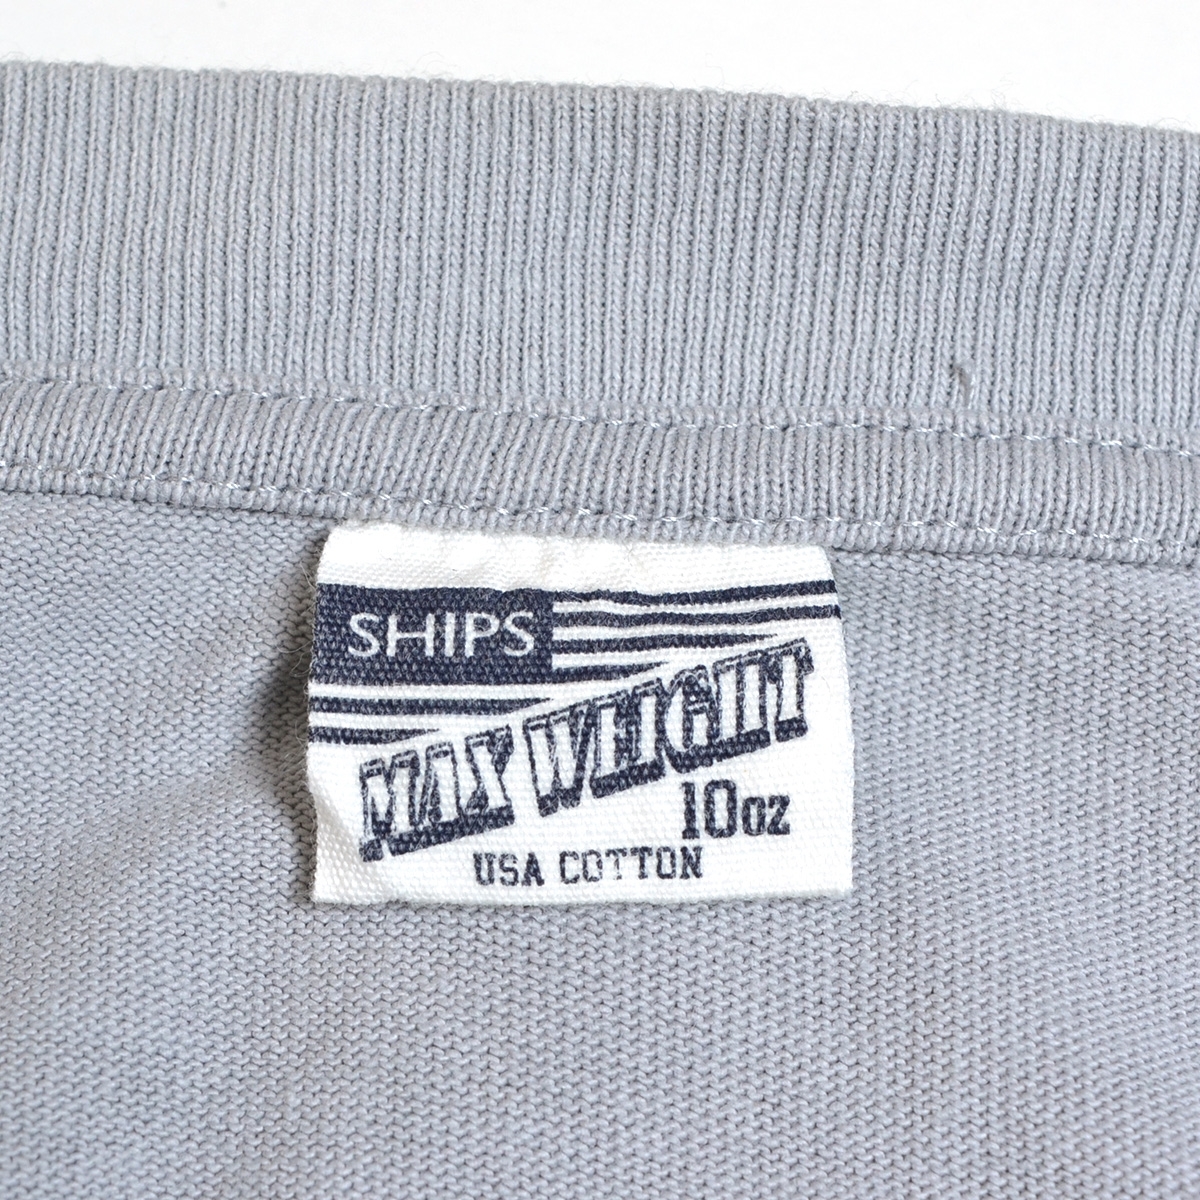 0492220 SHIPS Ships 0MAX WEIGHT Mac weight pocket T-shirt short sleeves size L men's blue 